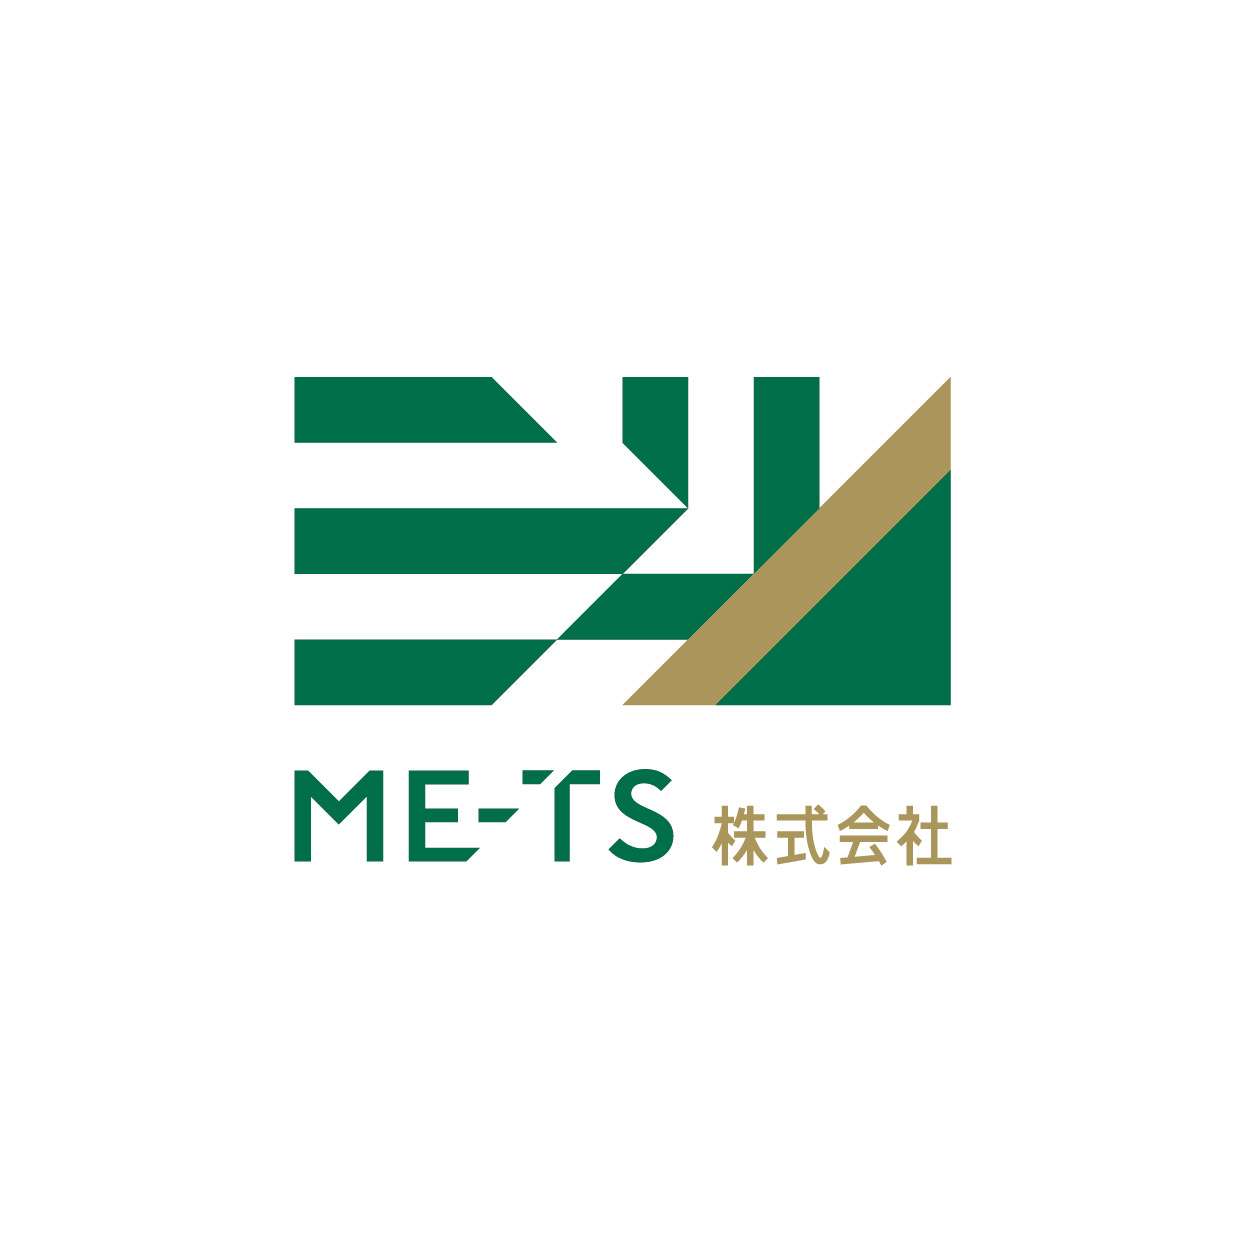 ME-TS株式会社